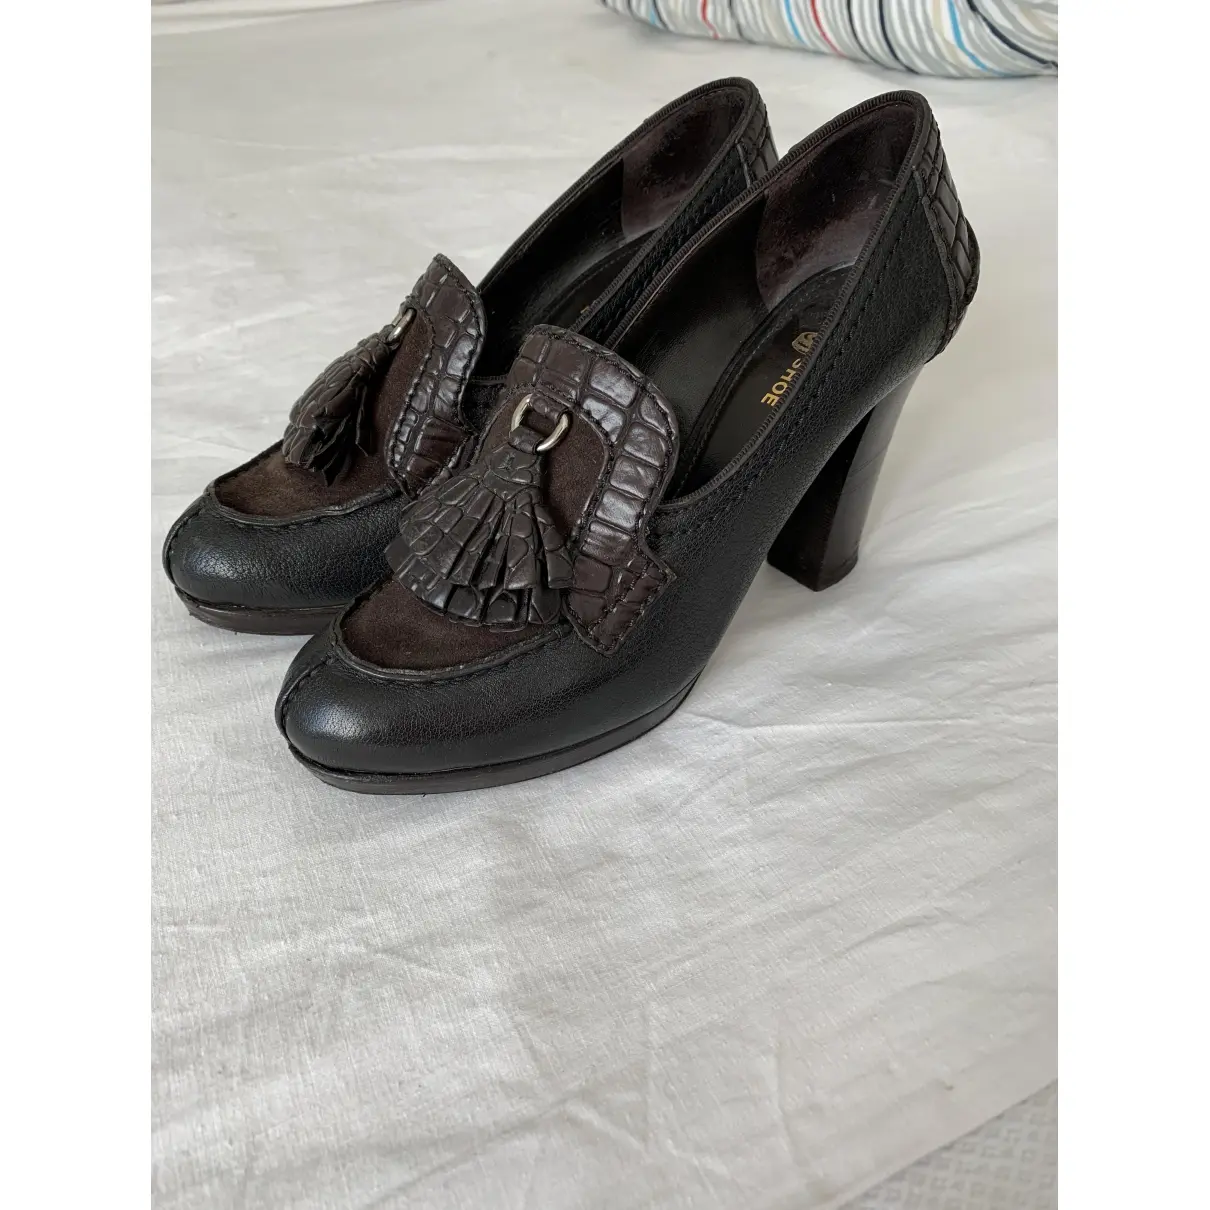 Leather heels Carshoe